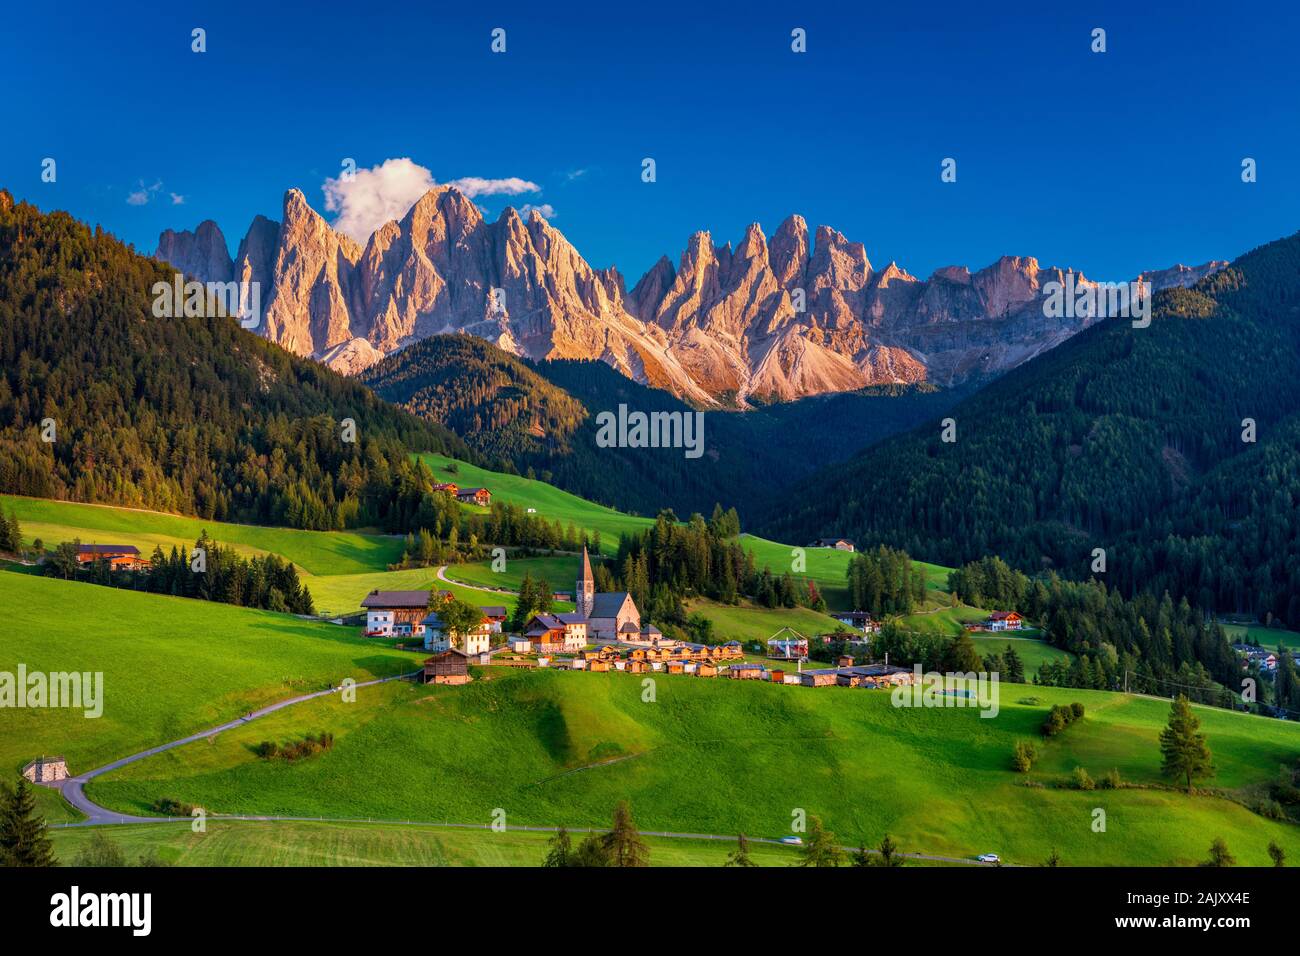 Tyrol (Santa magical background, Adige valley, mountains Photo di with Maddalena Val South Alto - region, Dolomites Stock village Santa Trentino Magdalena) Funes in Alamy